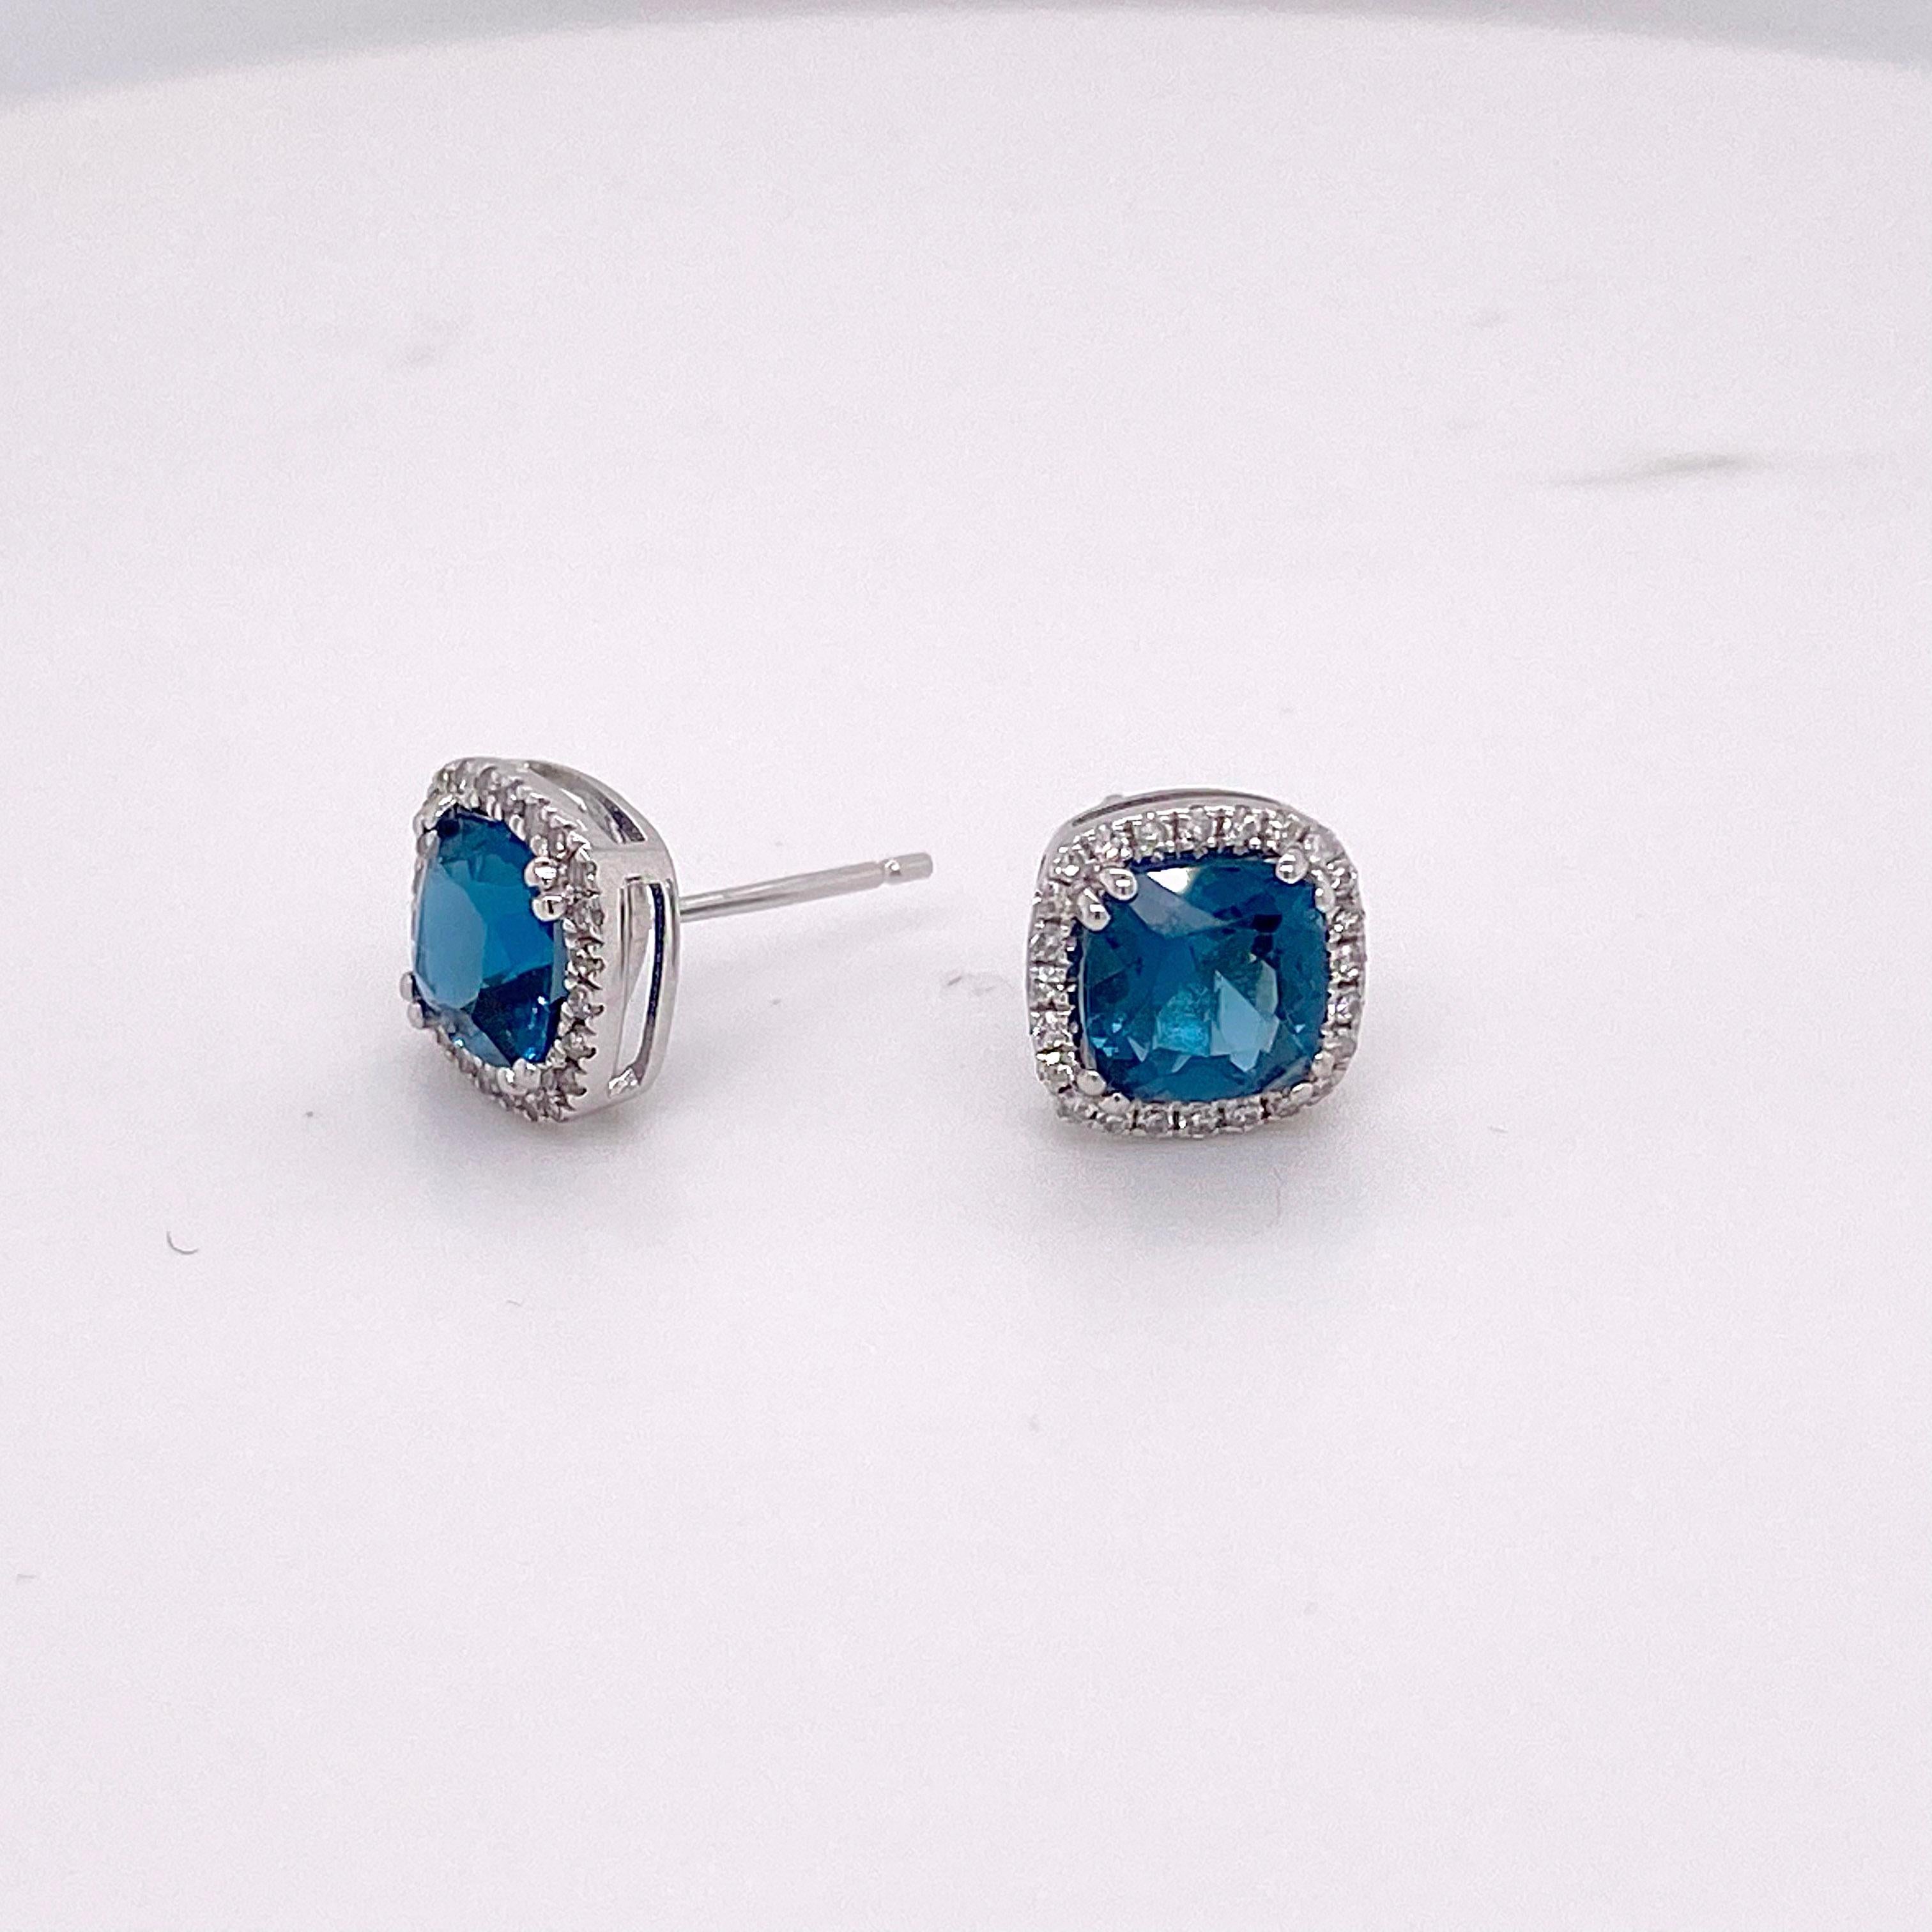 Modern Blue Topaz Diamond Studs Earrings, Halo of Diamonds, White Gold, Cushion Topaz